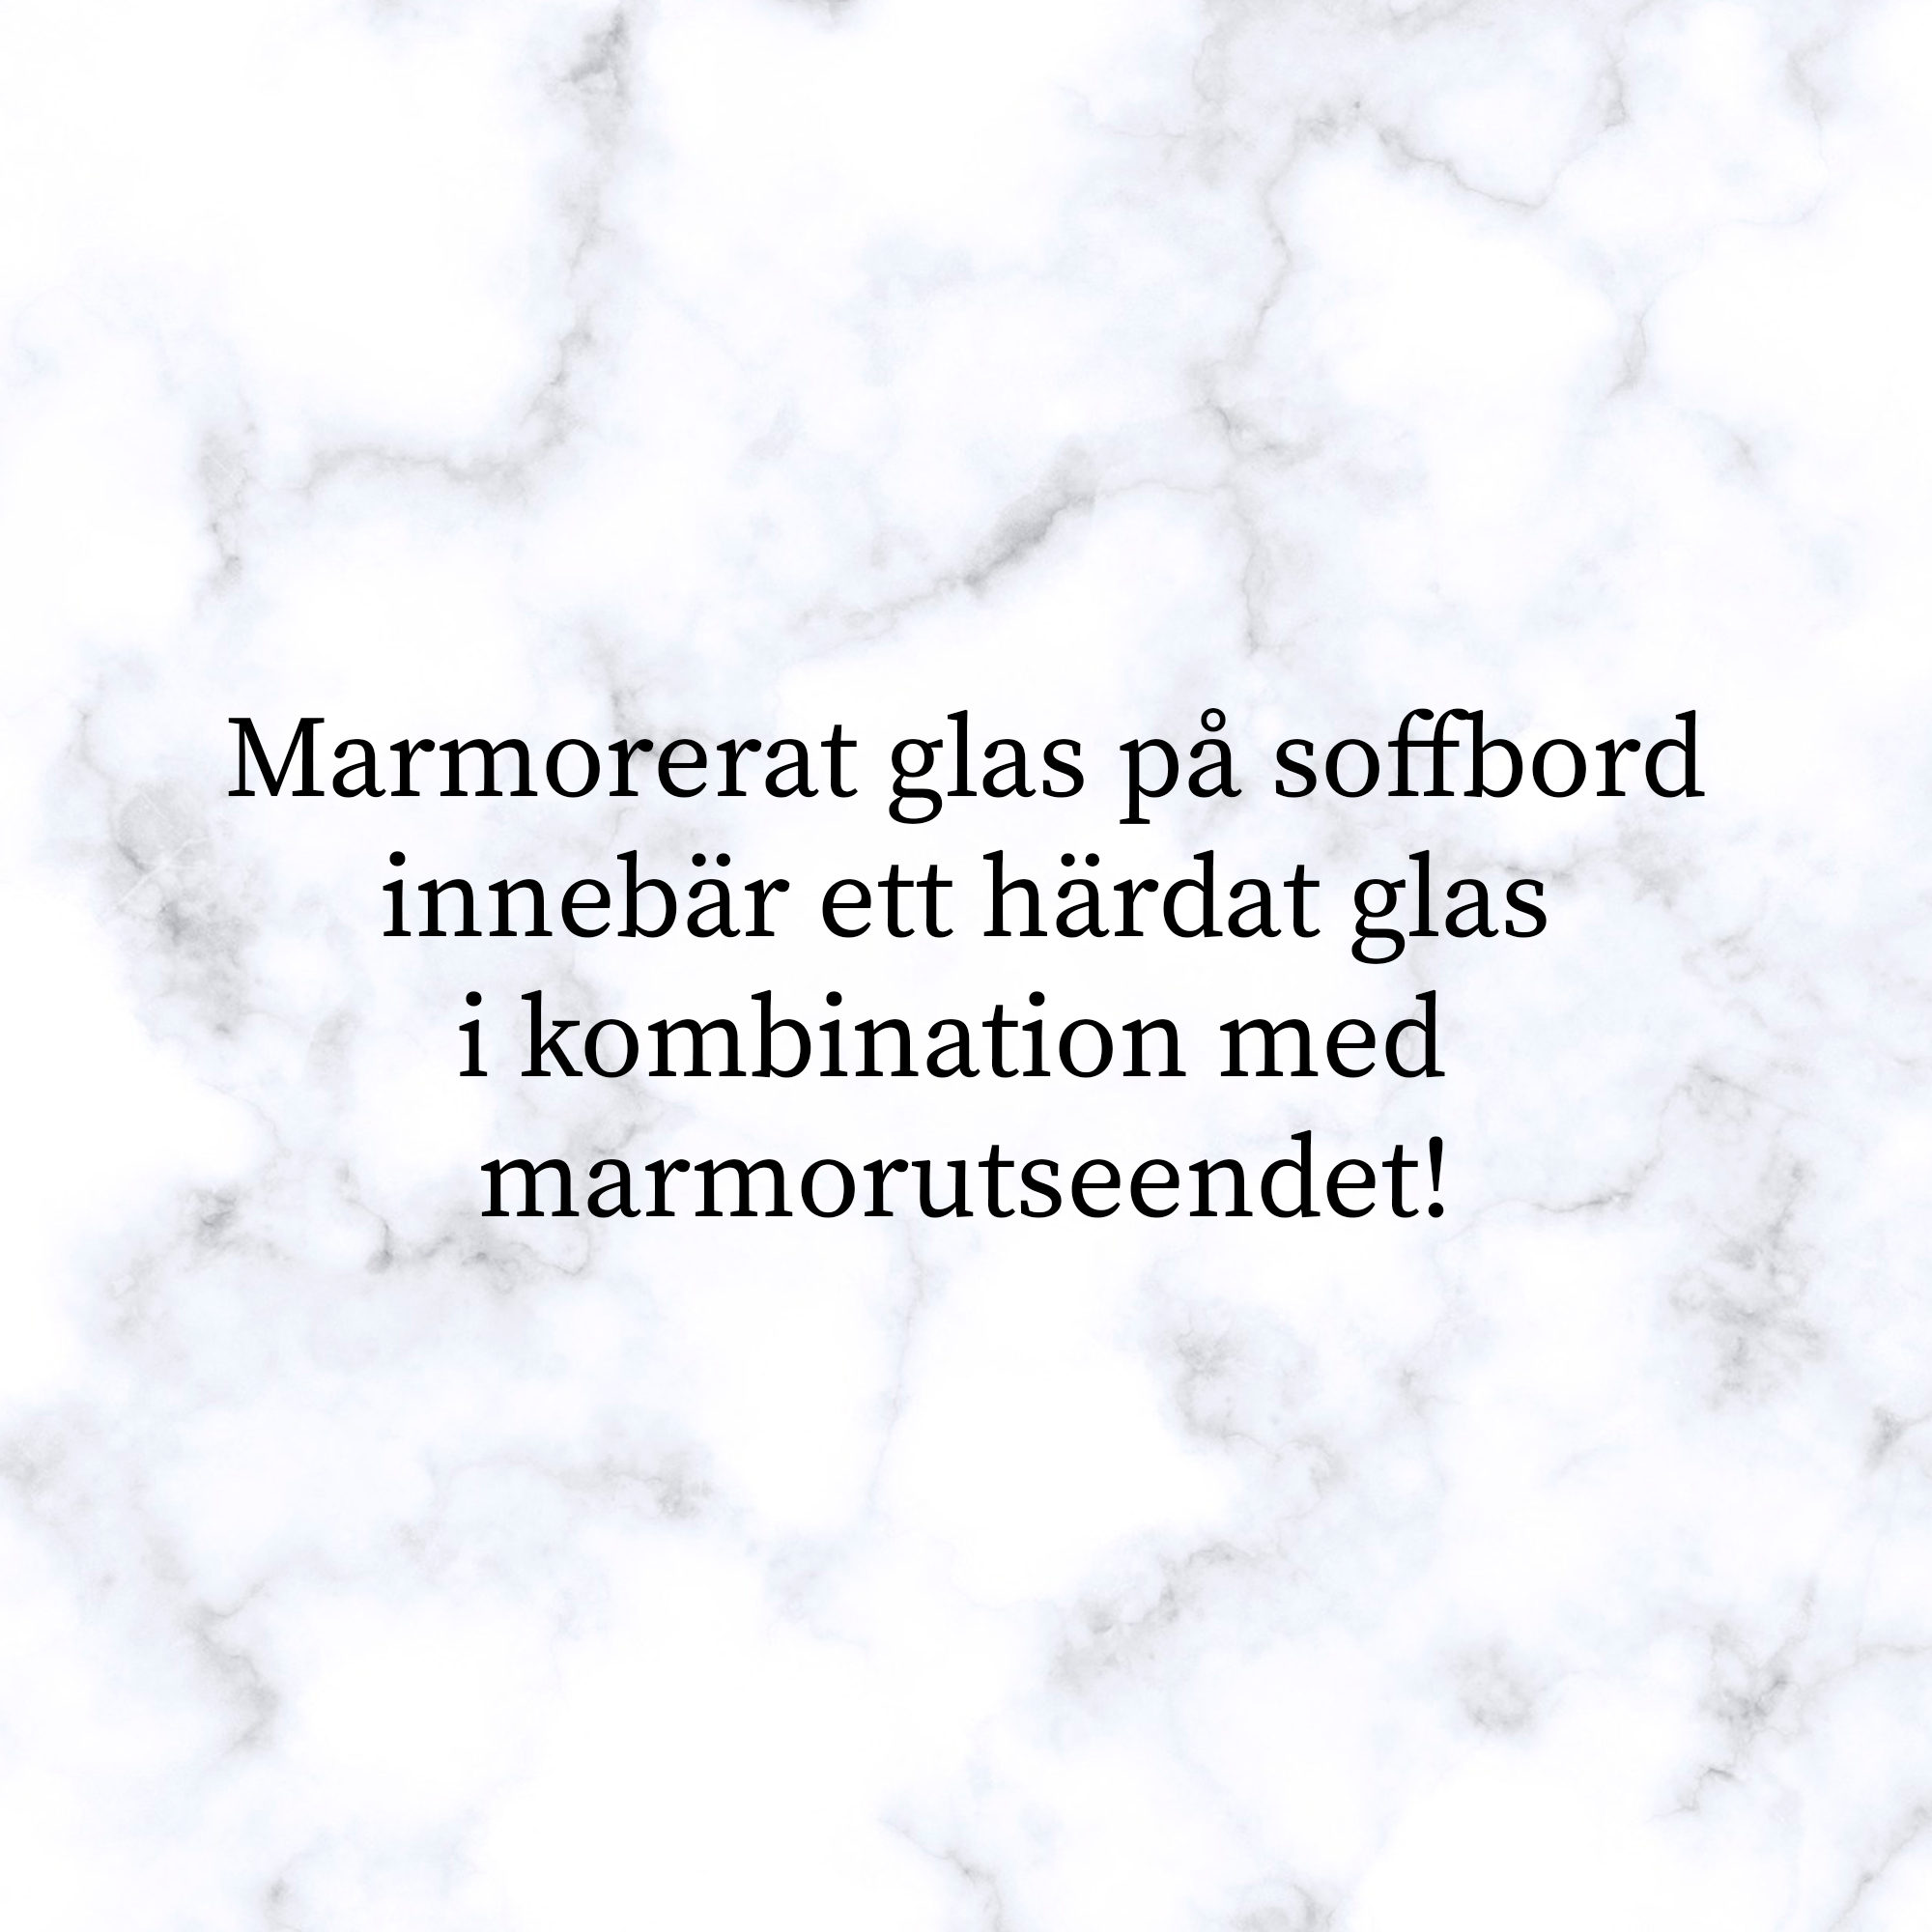 Marmorglas - Marmorerat glas soffbord hos Folkets Möbler, Mobil